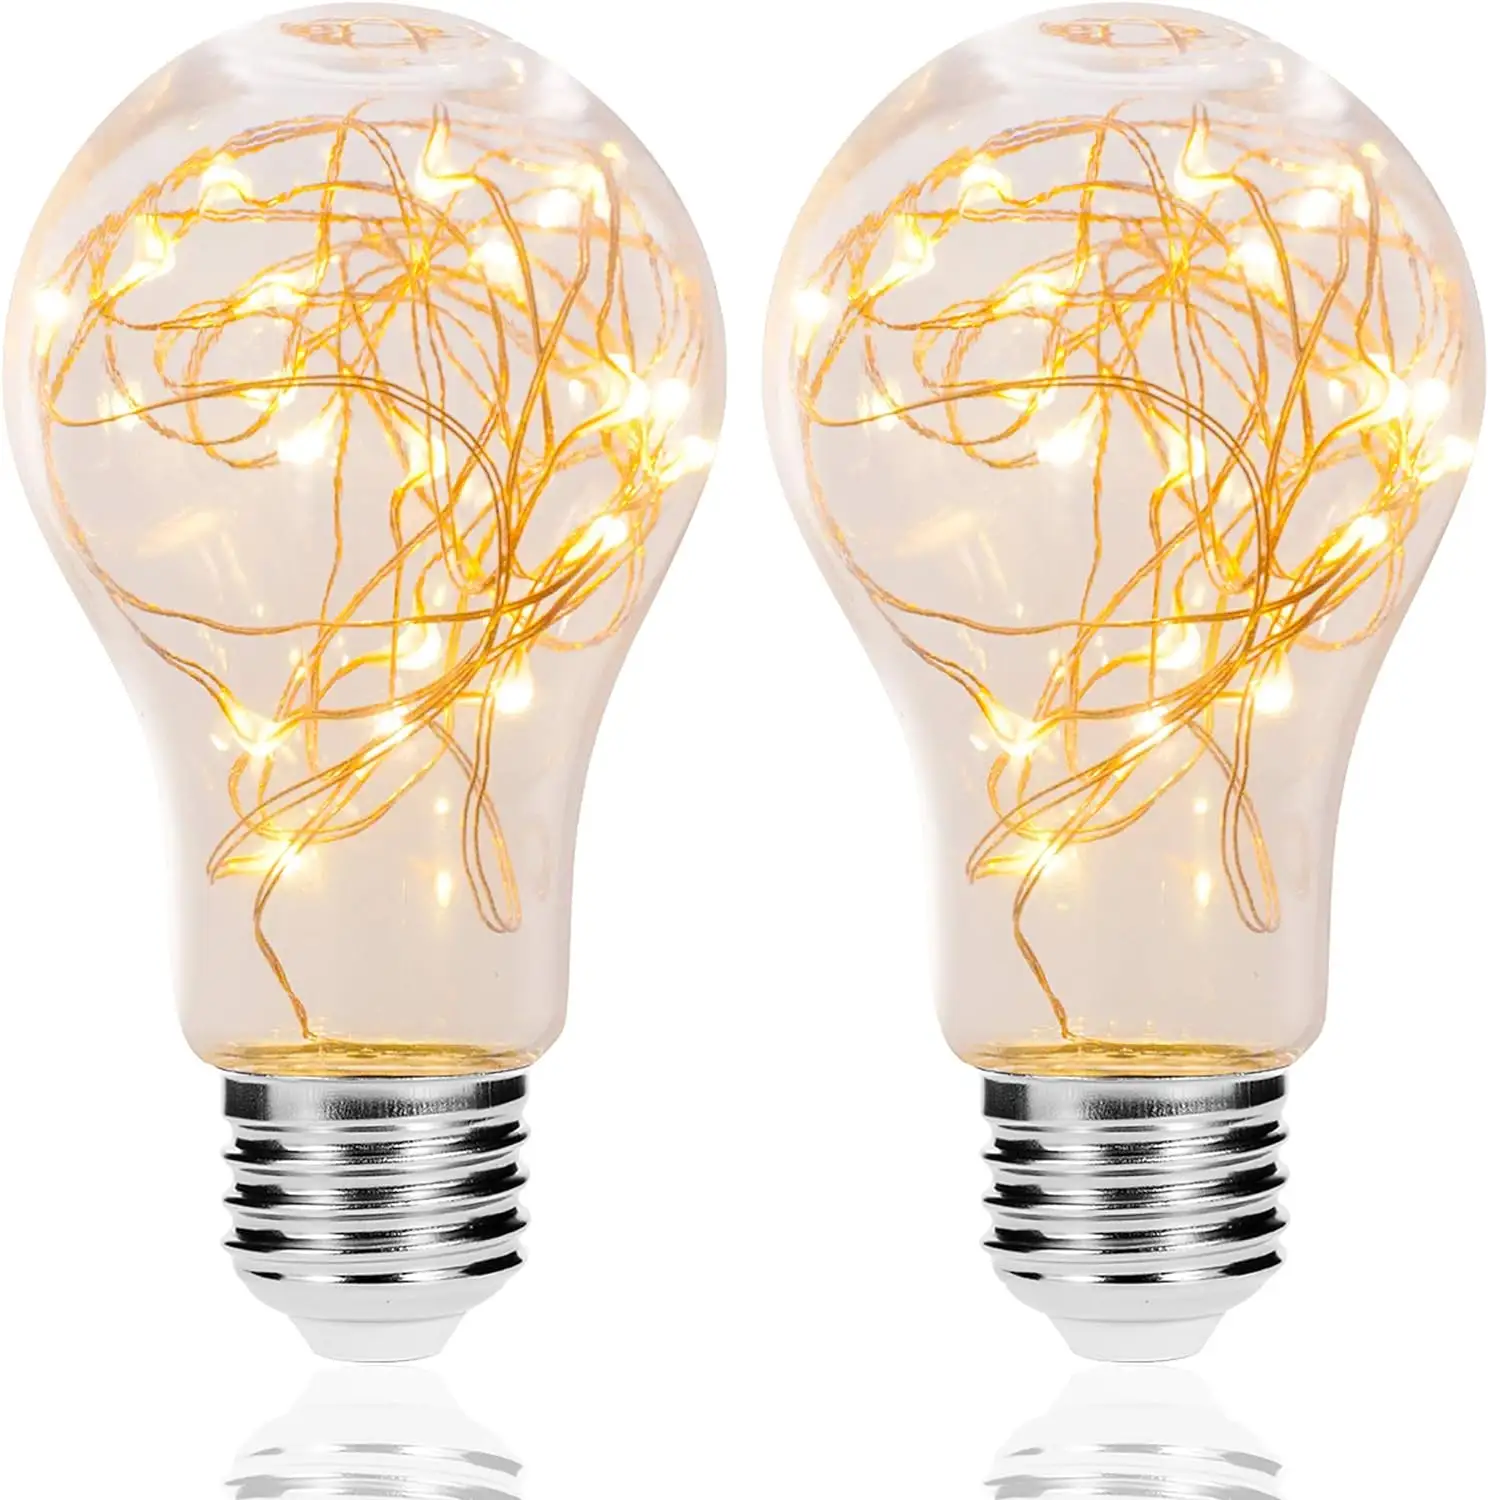 LOHAS A19 E26 antike Filament-LED-Glühbirnen 2700 K warme weiße LED-Dekorationsstring-Glühbirnen Urlaub Heimdekoration